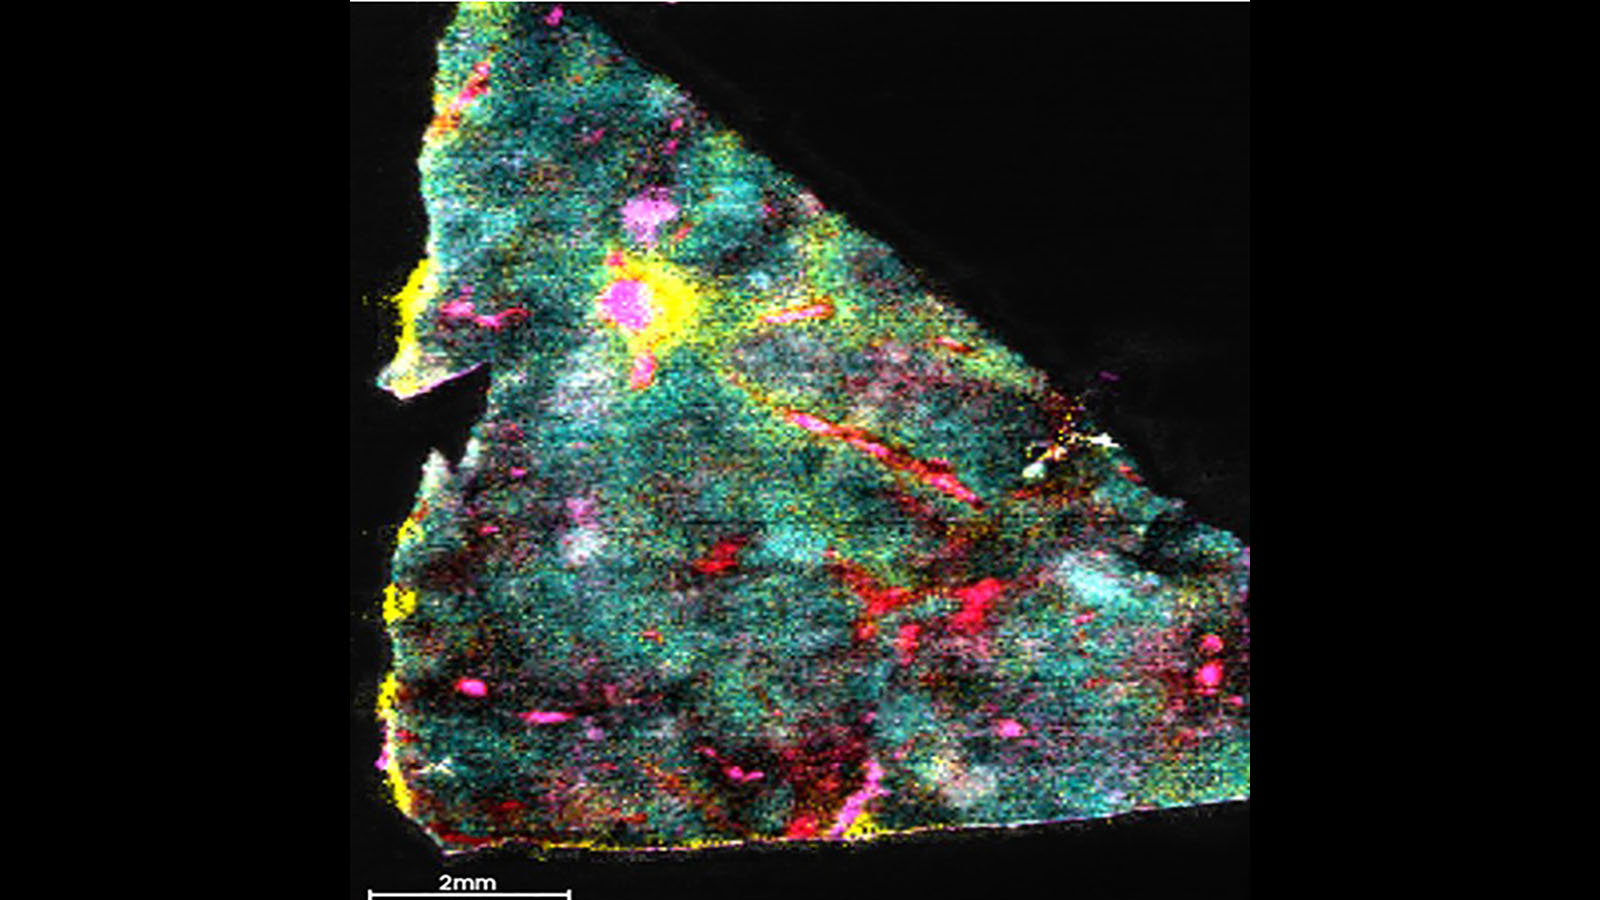 DESI image of lipids within a human liver, courtesy of Dr. Presha Rajbhandari at Columbia University